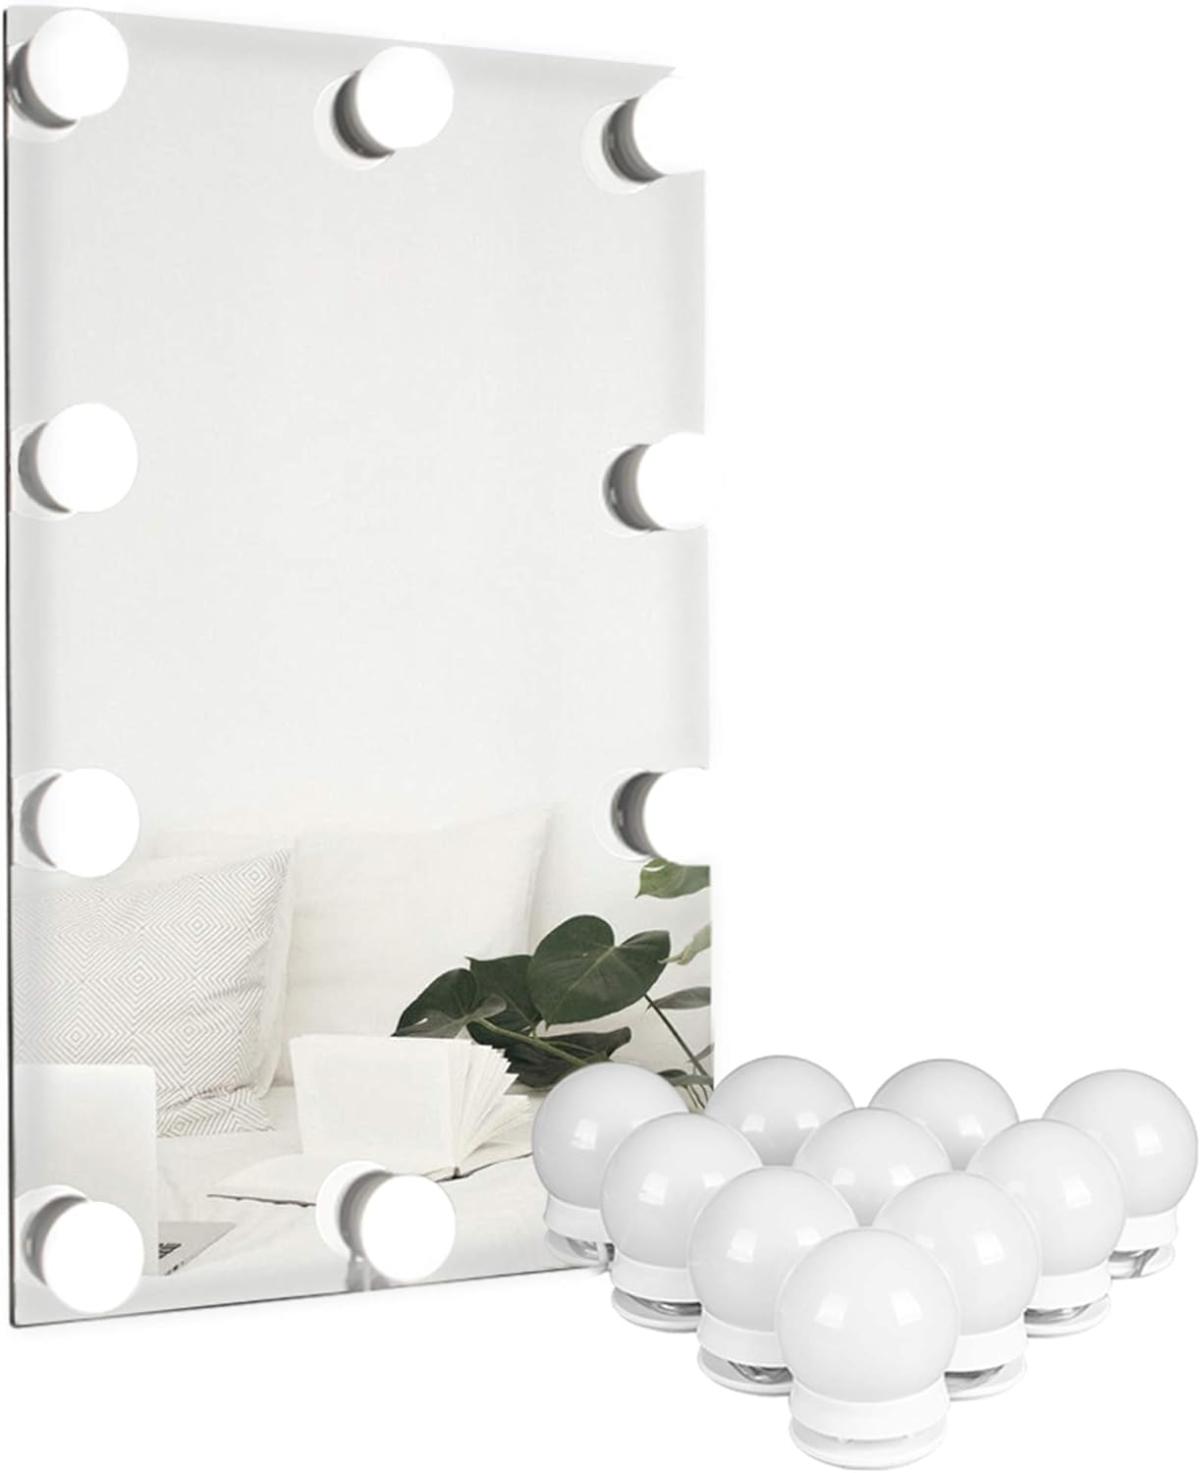 Waneway Vanity Lights for DIY Vanity Mirror